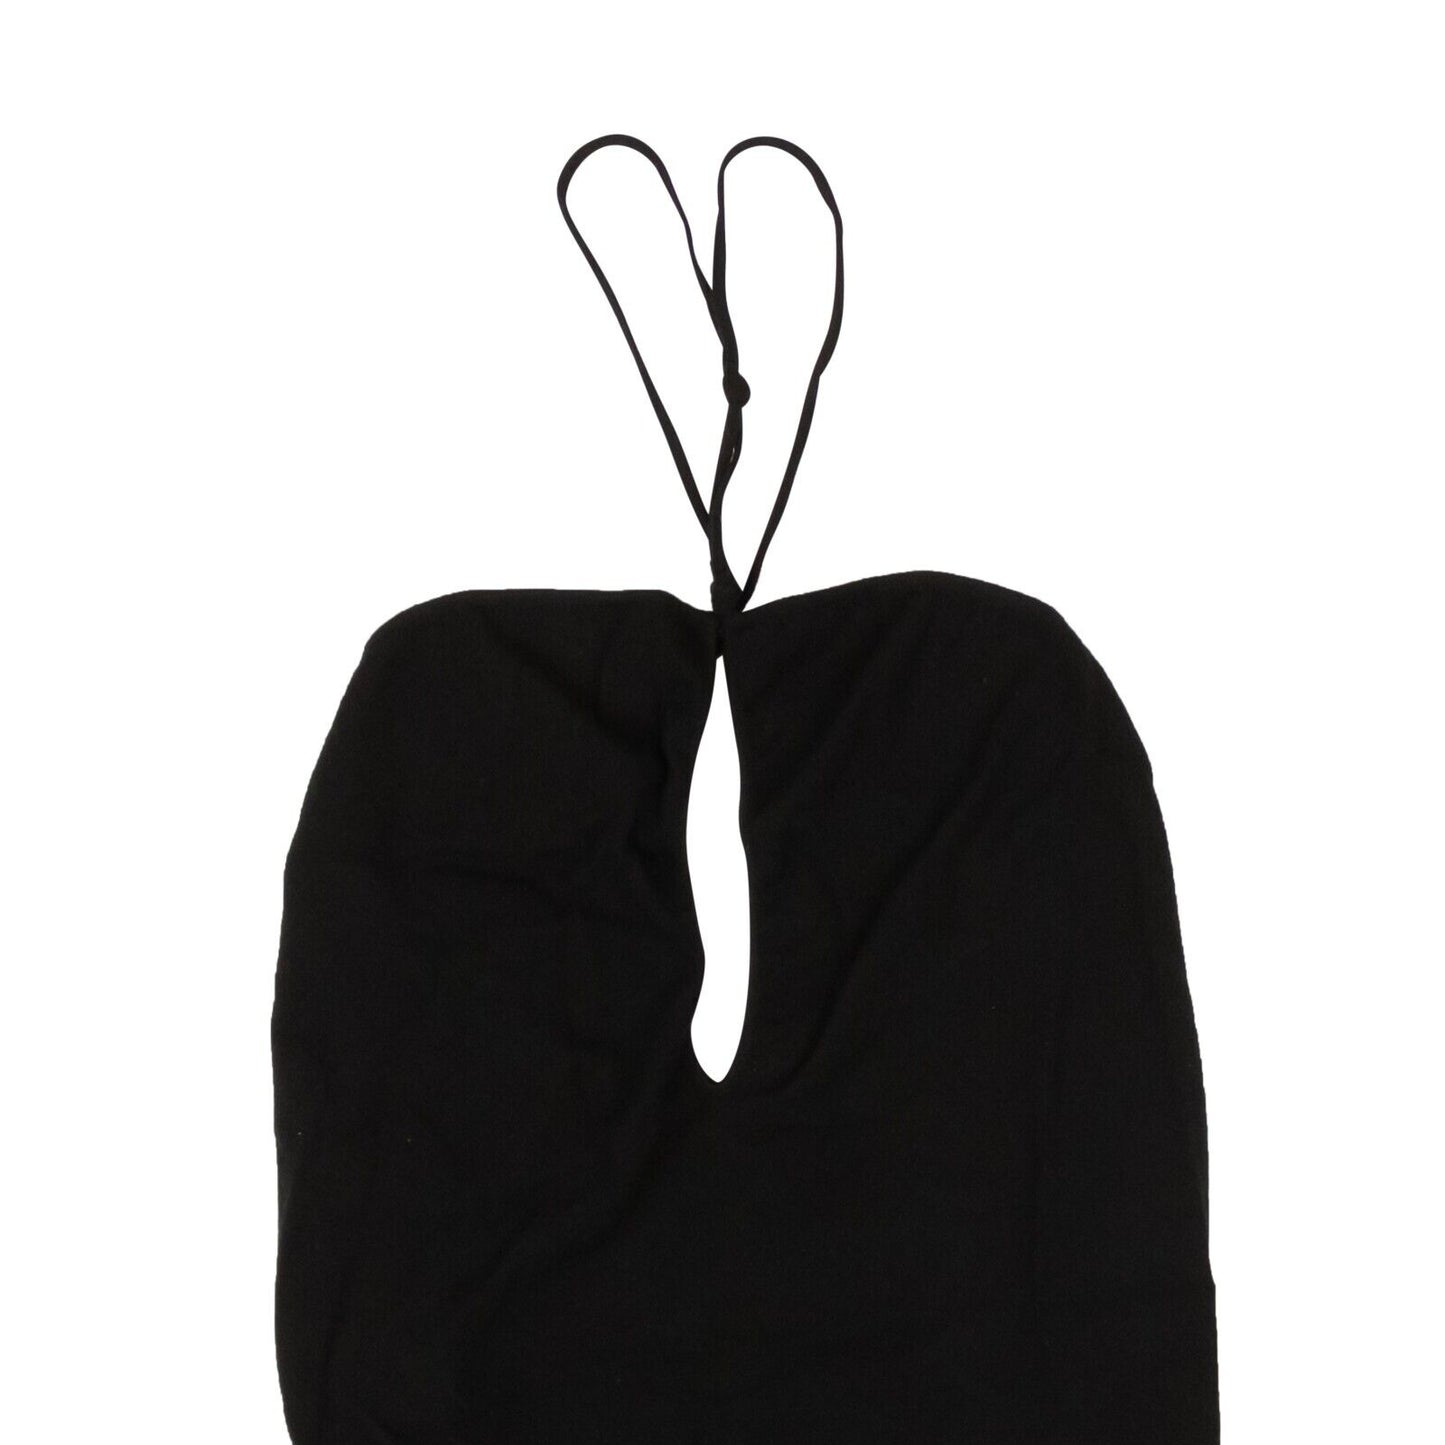 Bottega Veneta Knit Bodysuit - Black